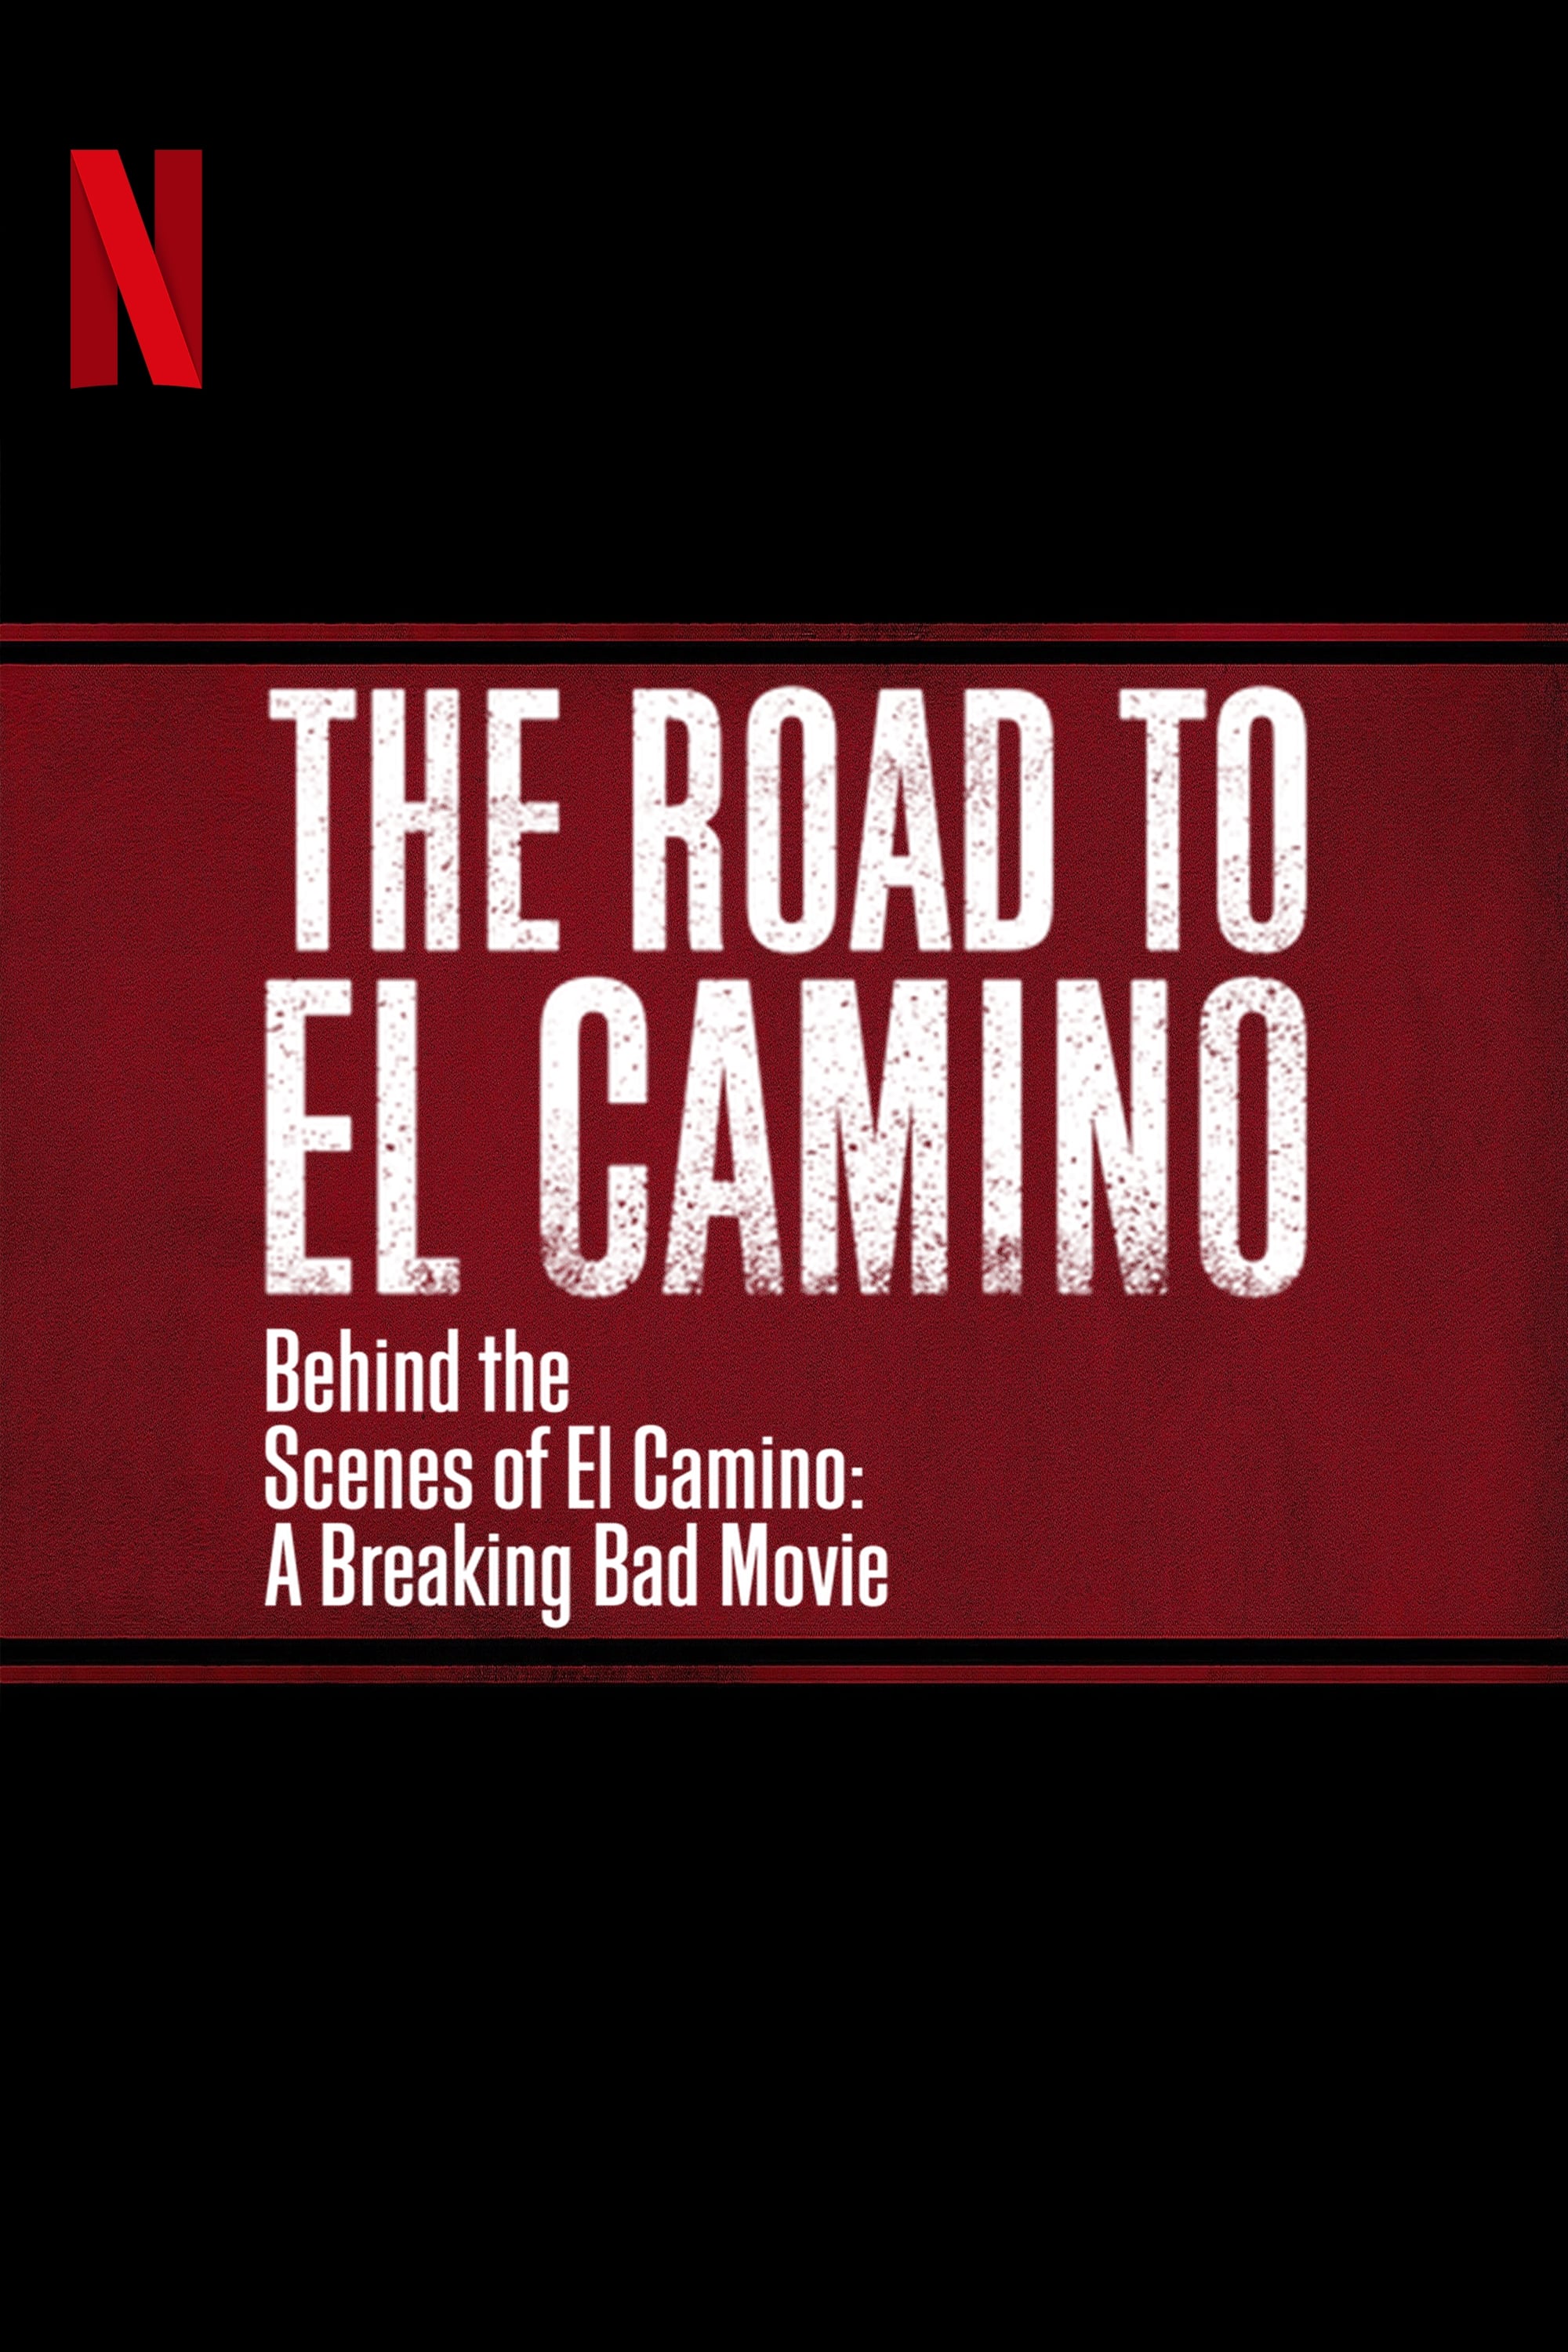 Hậu trường El Camino: Phim hậu bản của: Tập làm người xấu (The Road to El Camino: Behind the Scenes of El Camino: A Breaking Bad Movie) [2019]